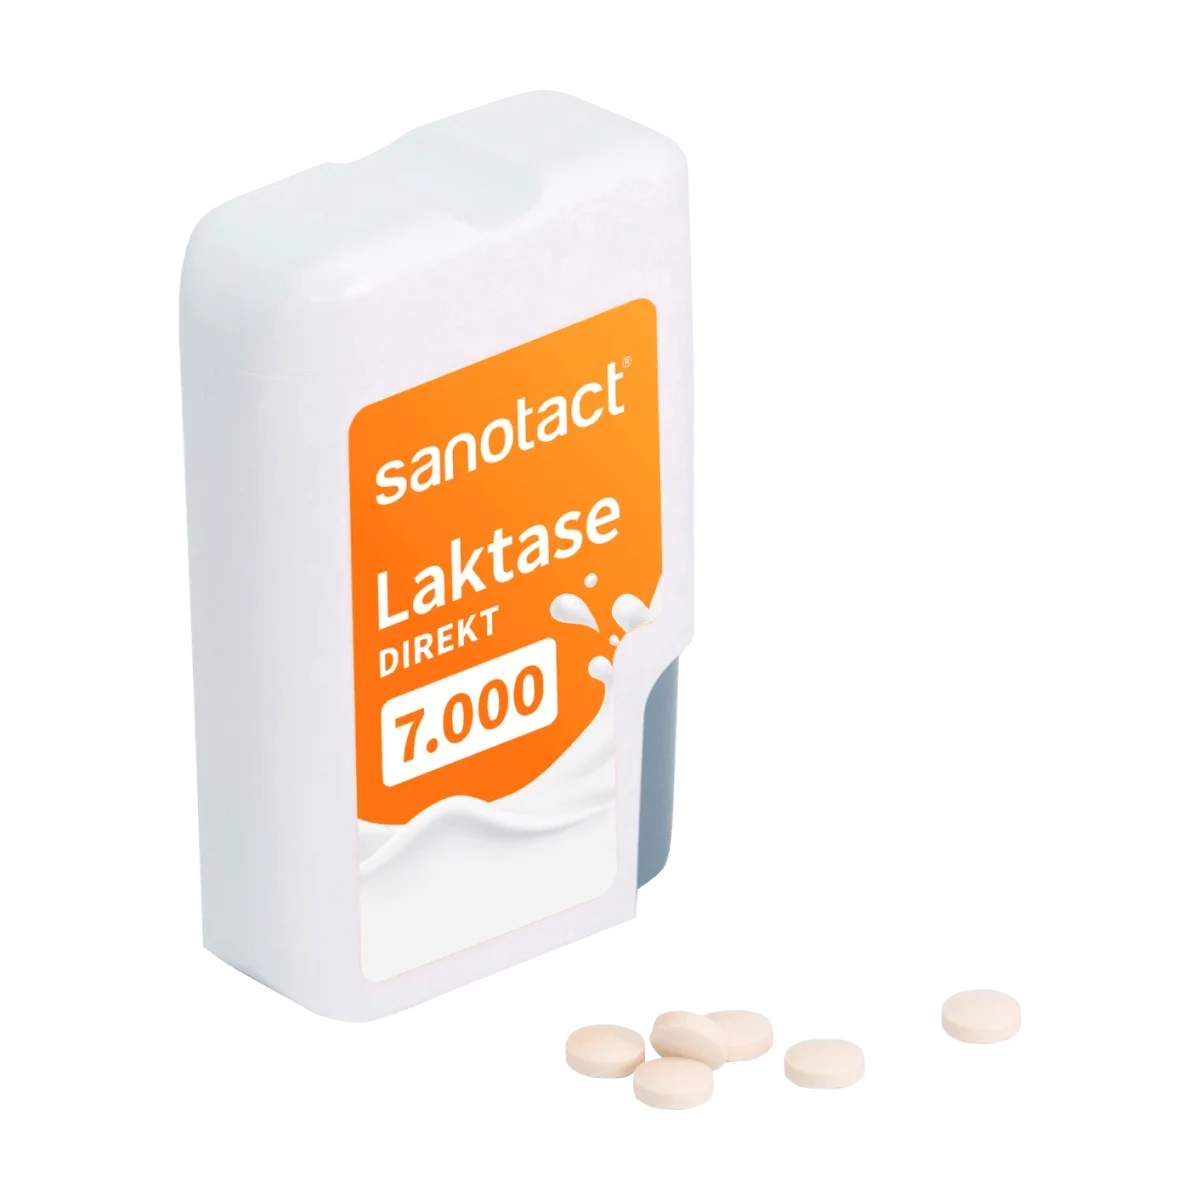 sanotact Laktase 7000 Direkt Mini Tabletten 90 Stk, 7.1 g